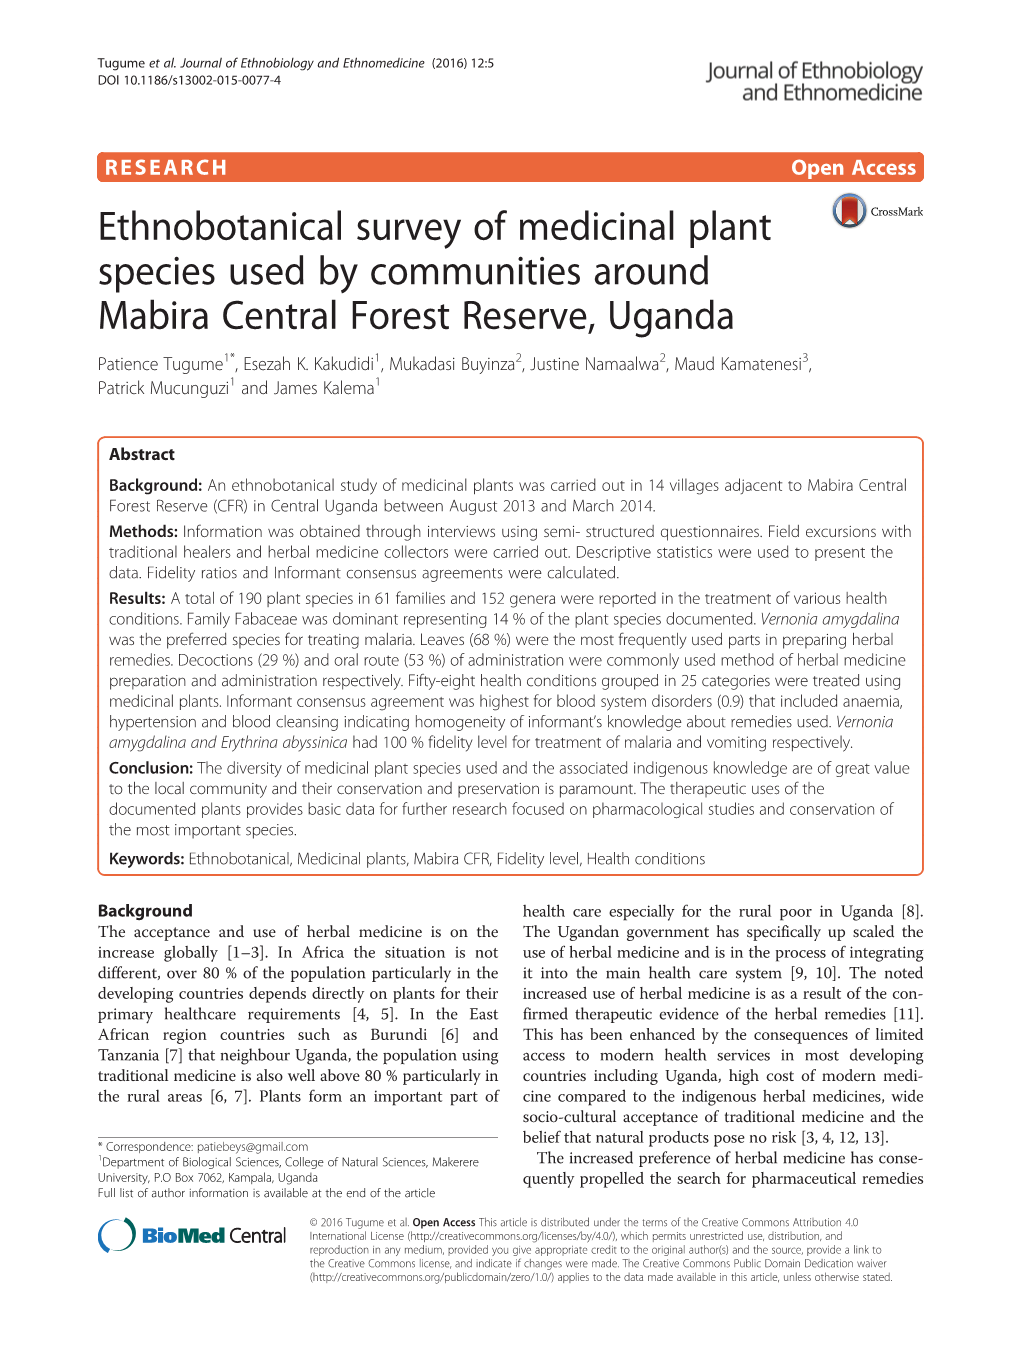 Ethnobotanical Survey of Medicinal Plant Species Used by Communities Around Mabira Central Forest Reserve, Uganda Patience Tugume1*, Esezah K